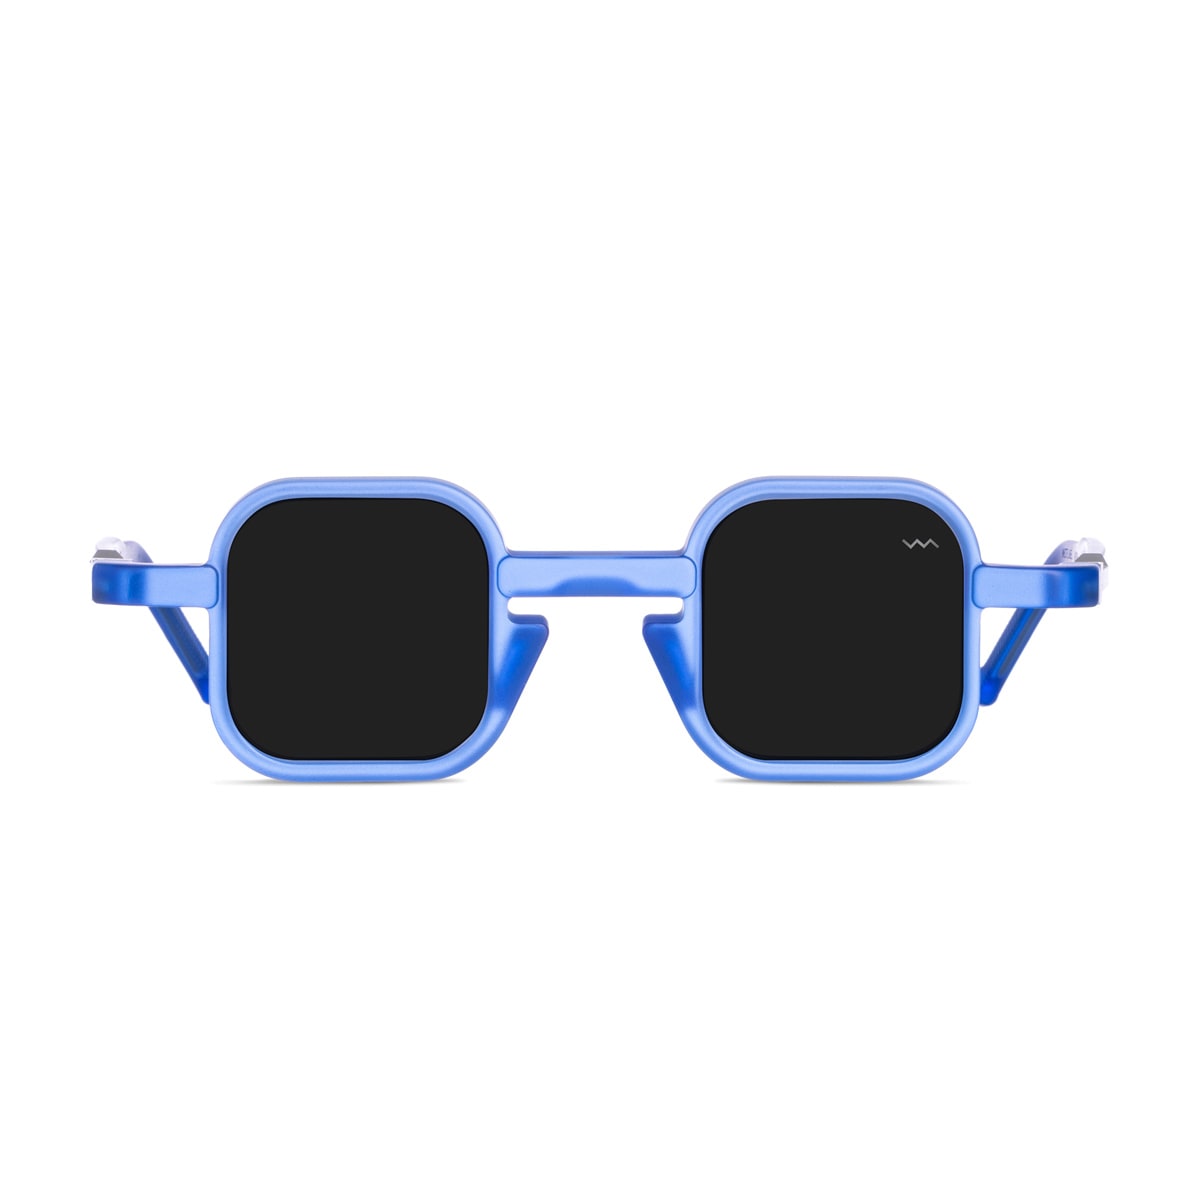 Wl0067 White Label Crystal Blue Matte Sunglasses